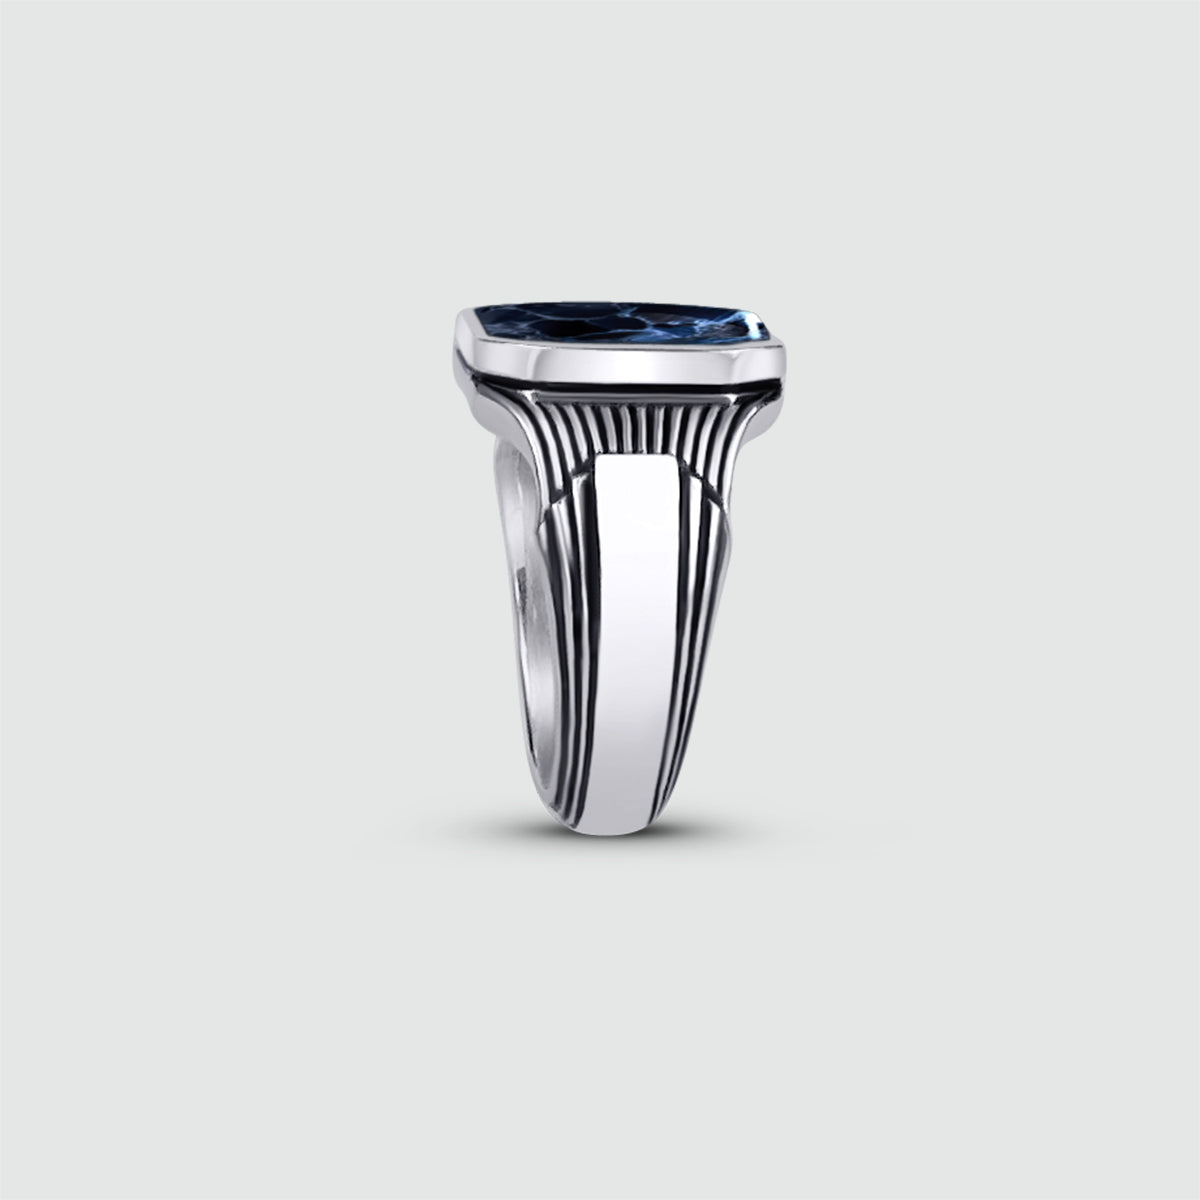 Bariq - Blue Petersite Signet Ring 17mm